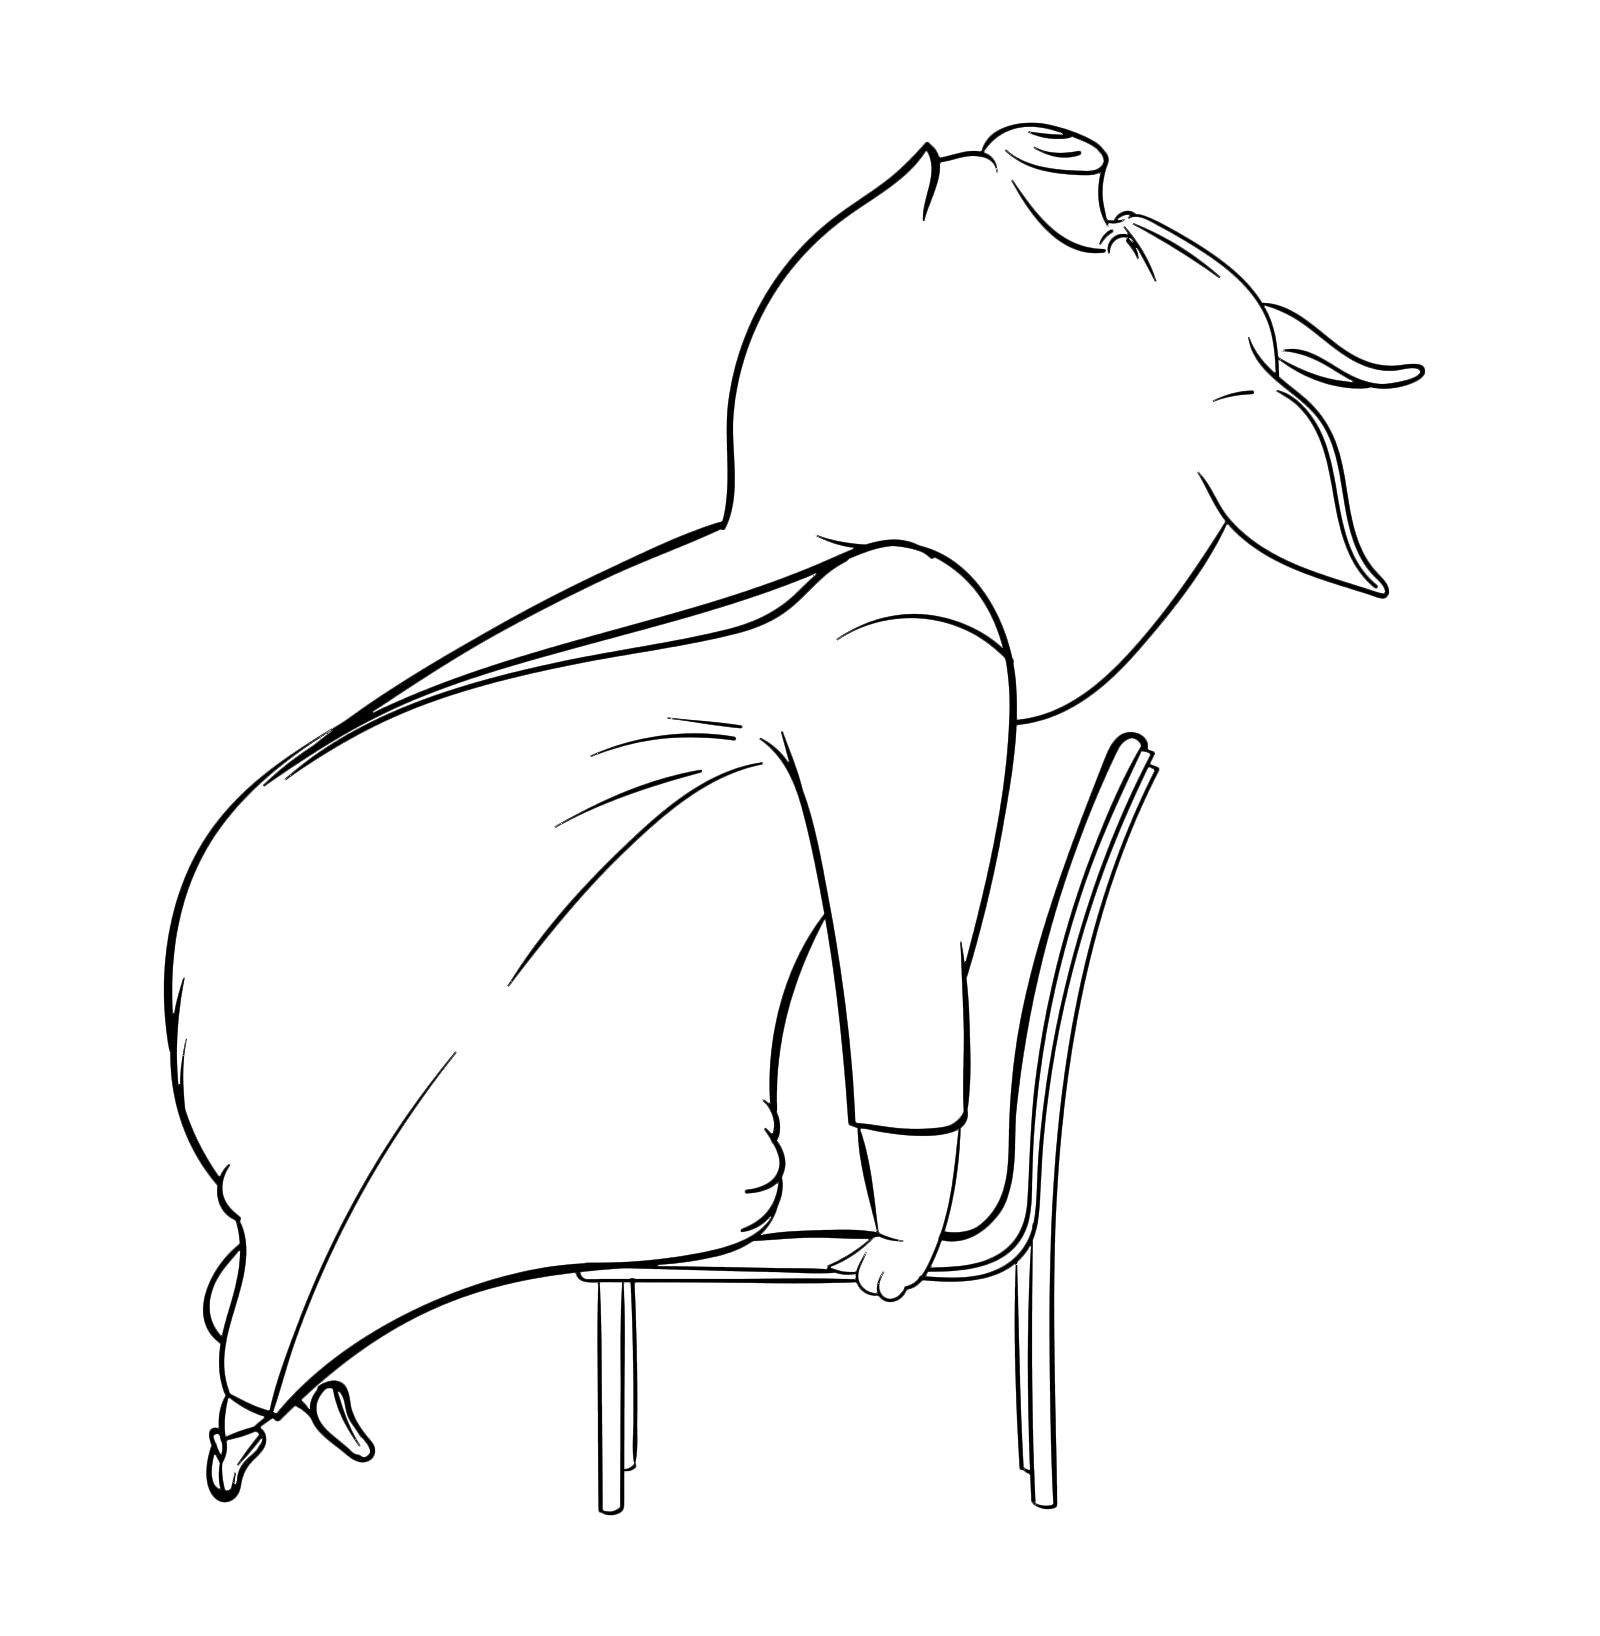 Sing - Rosita la maialina sulla sedia mentre si esibisce